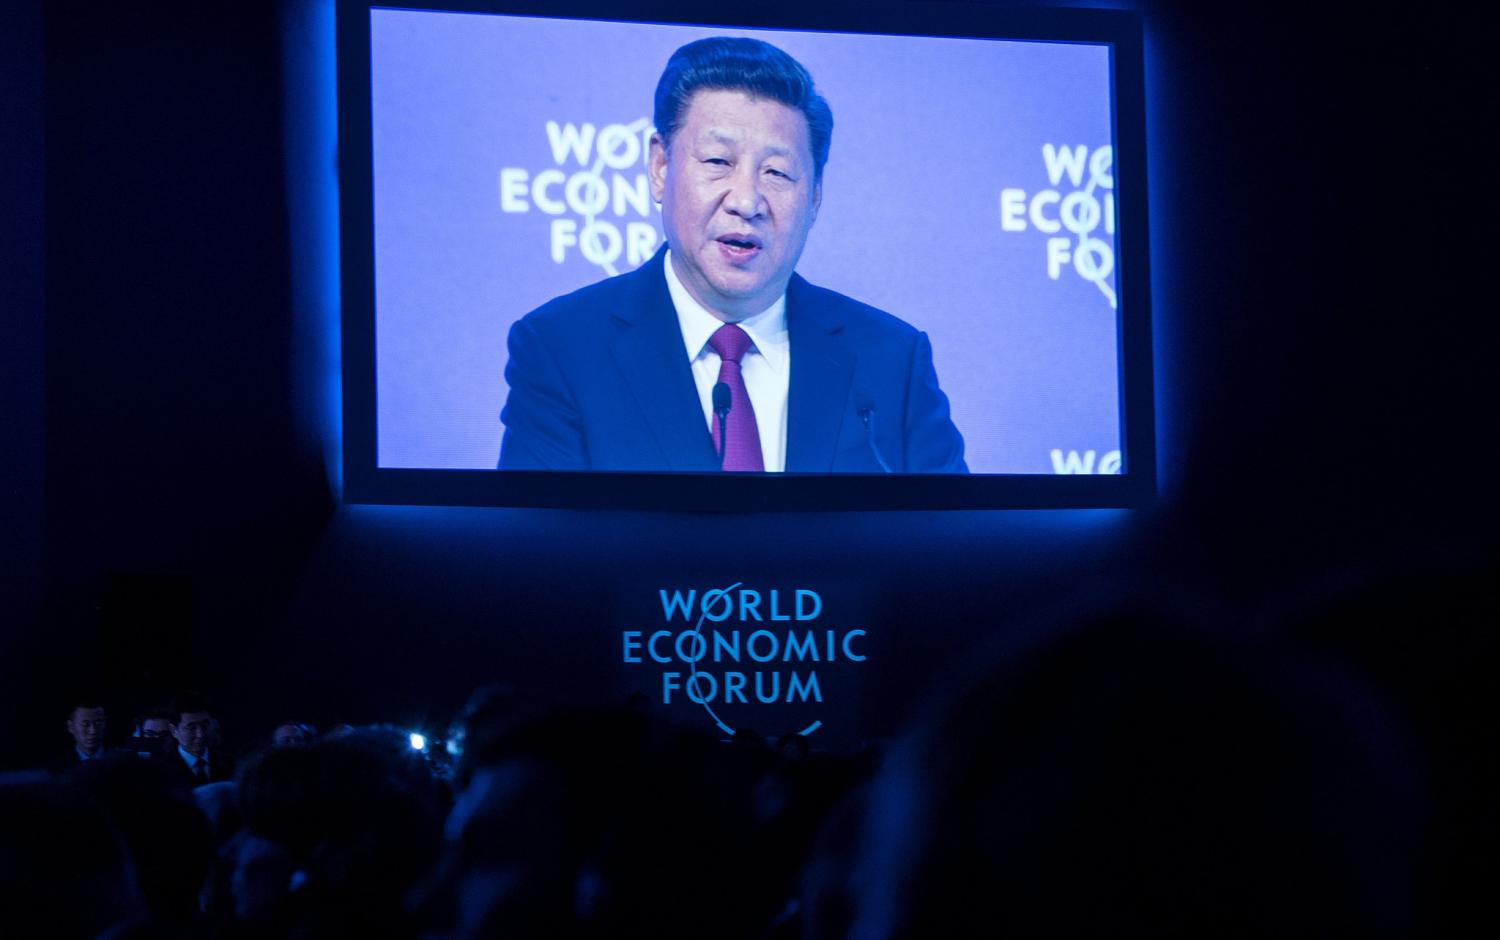 Chinese President Xi Jinping addressing the World Economic Forum at Davos, Switzerland, 2017 (Photo: Flickr/World Economic Forum)